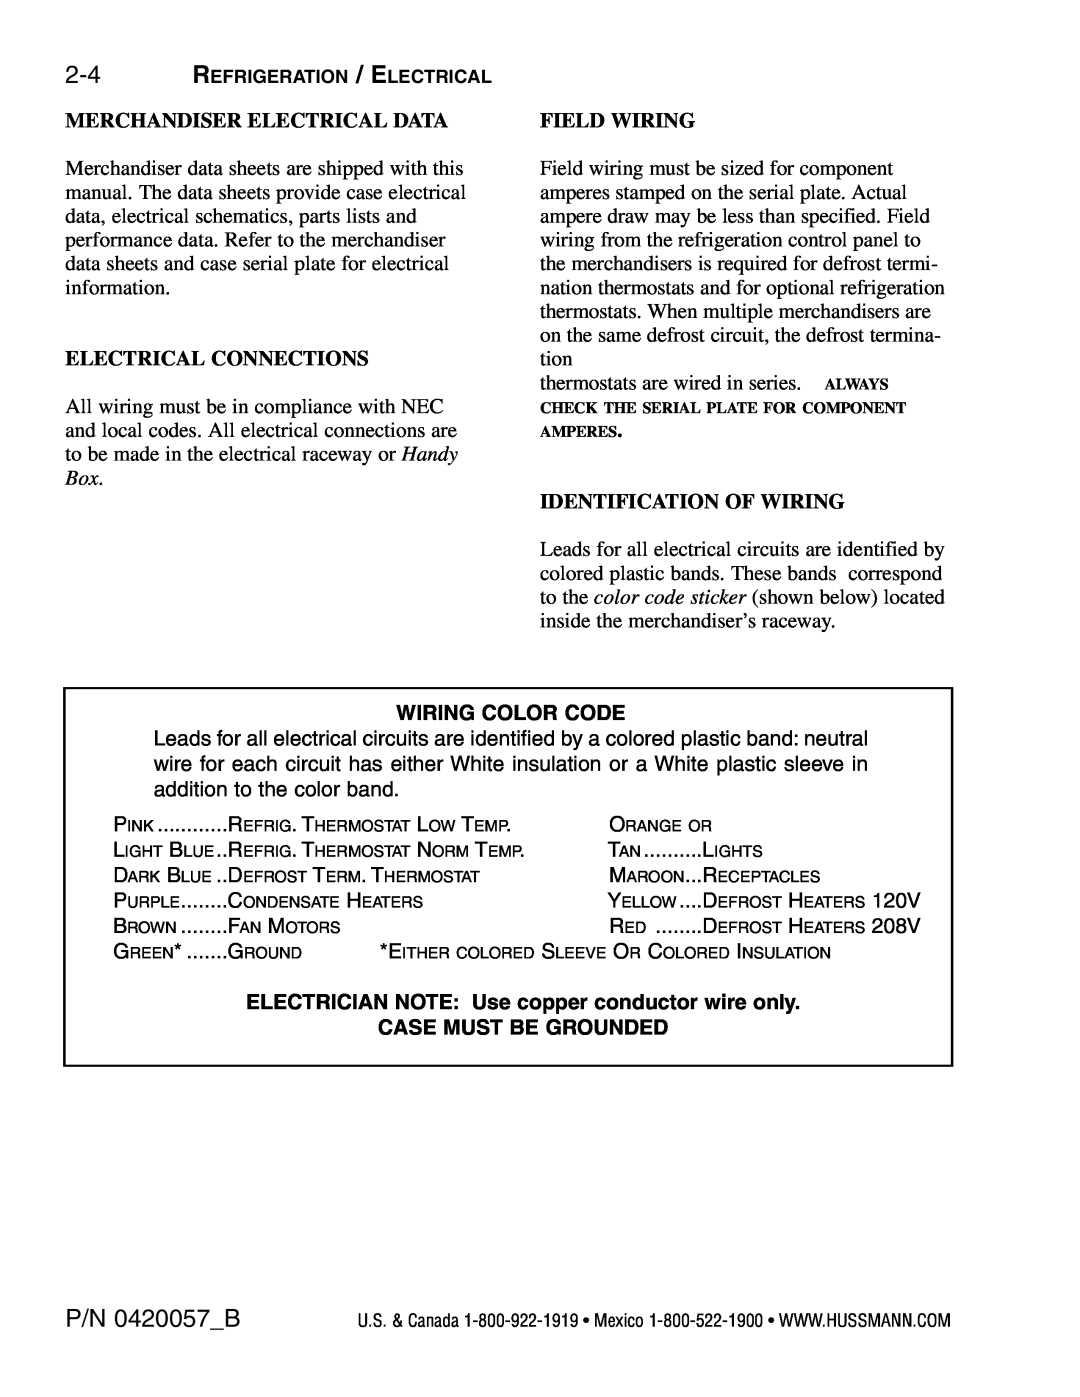 hussman P/N 0420057_B operation manual P/N 0420057B, Merchandiser Electrical Data, Electrical Connections, Field Wiring 